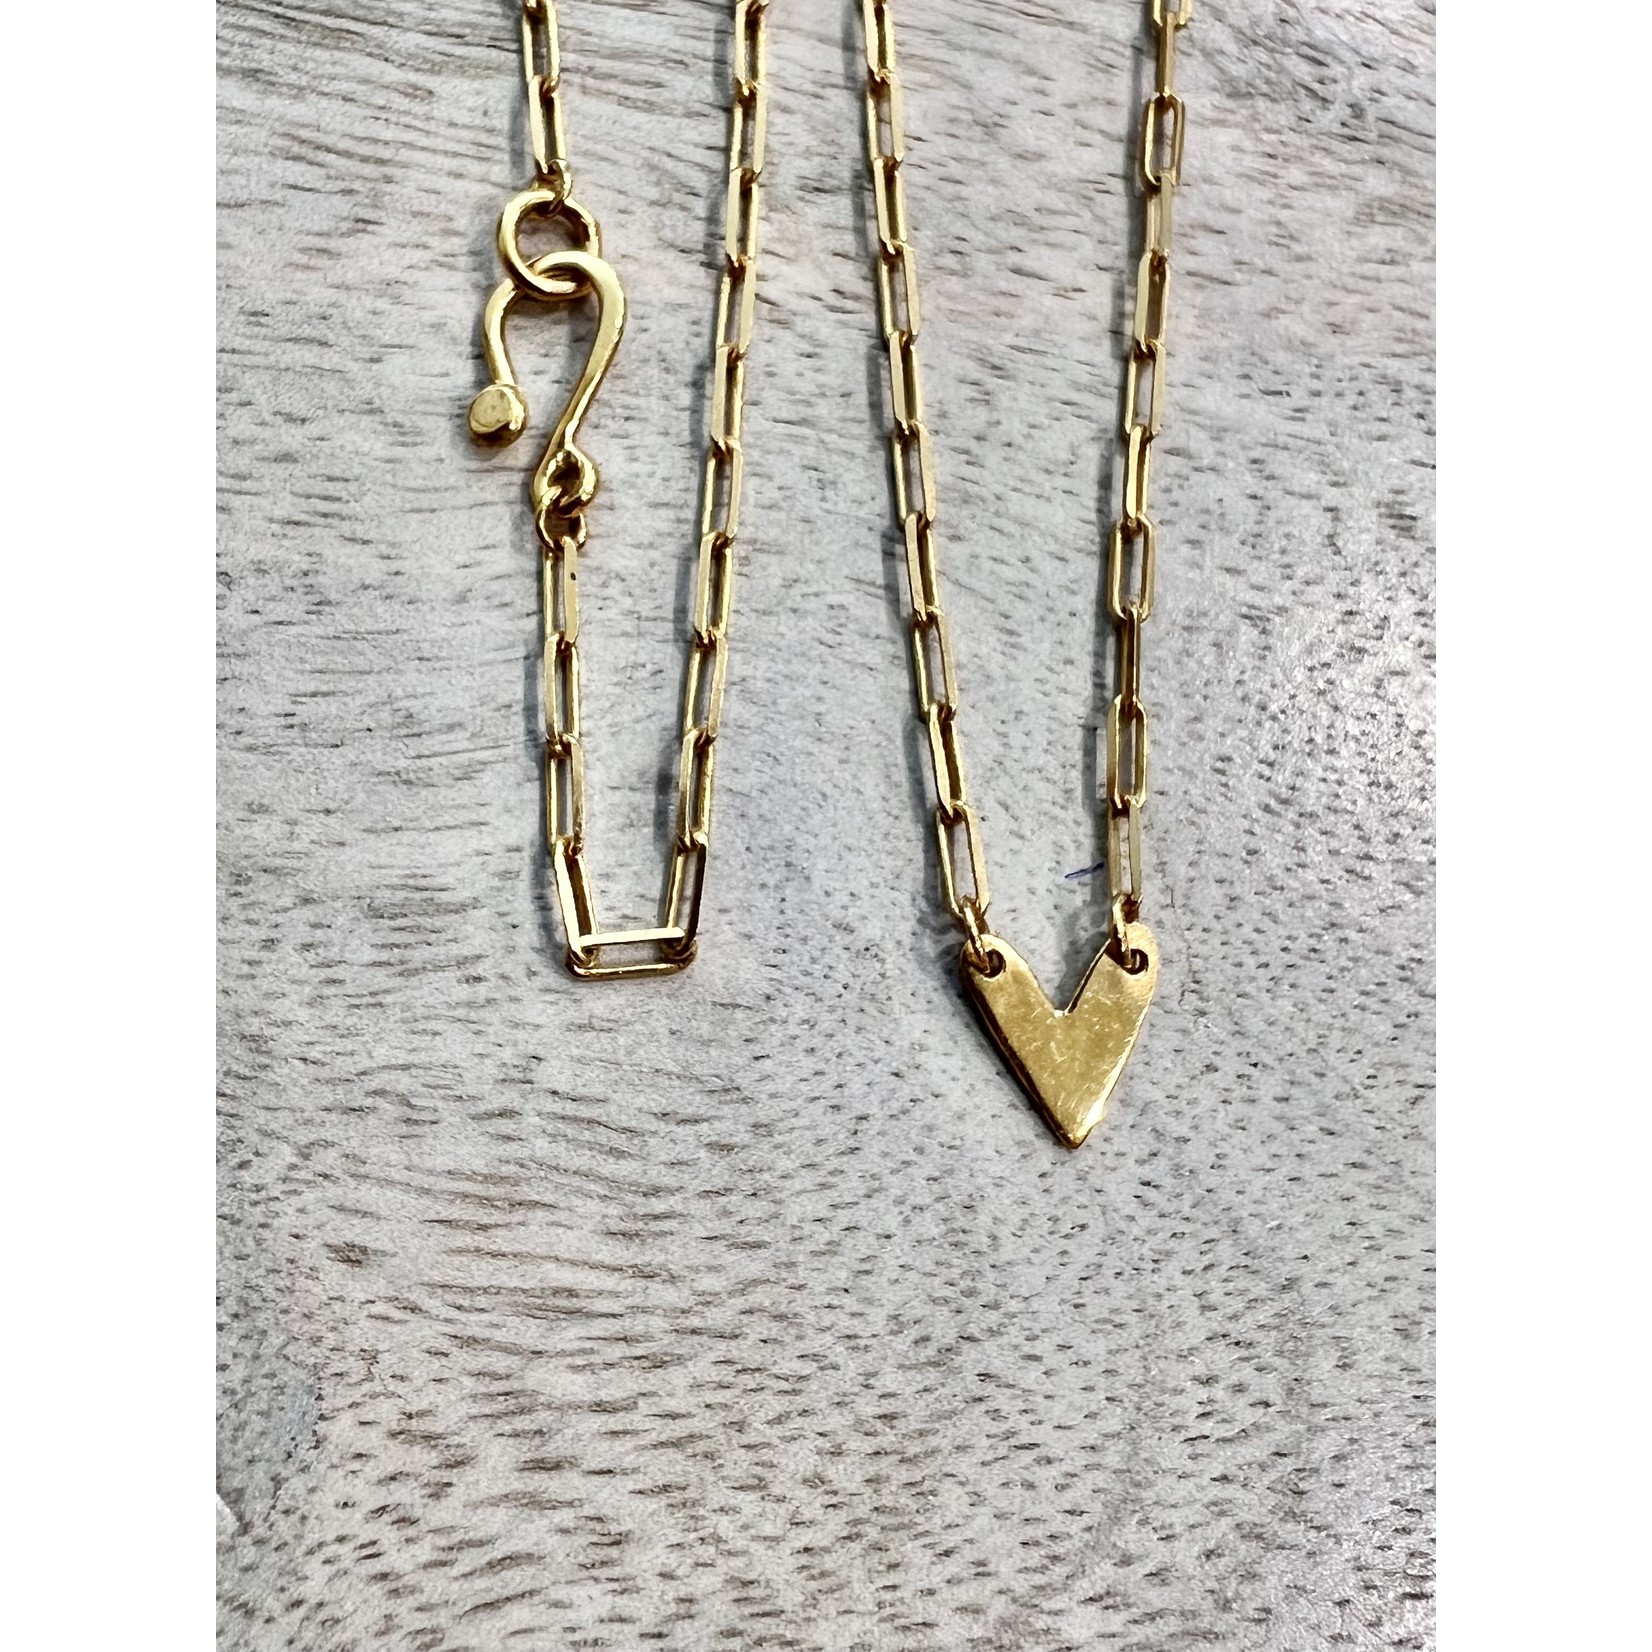 DeNev 18kt Gold Vermeil Heart Necklace on 18kt GV Link Chain